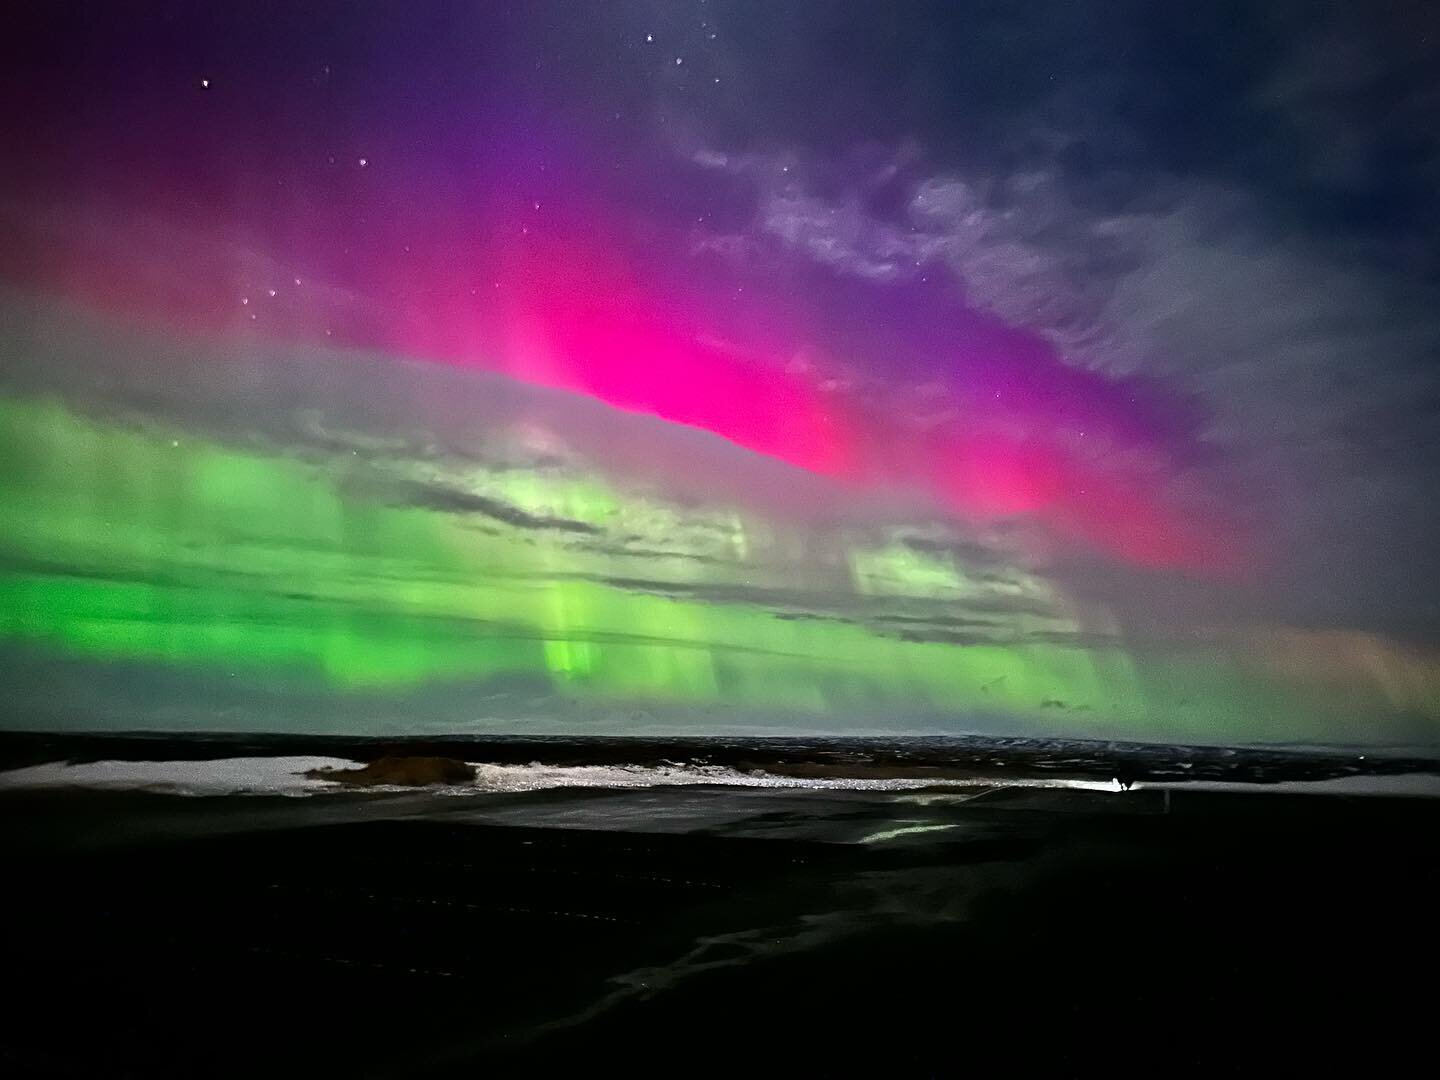 Look at those vivid colors!
#northernlights #northernlightsiceland #auroraborealis